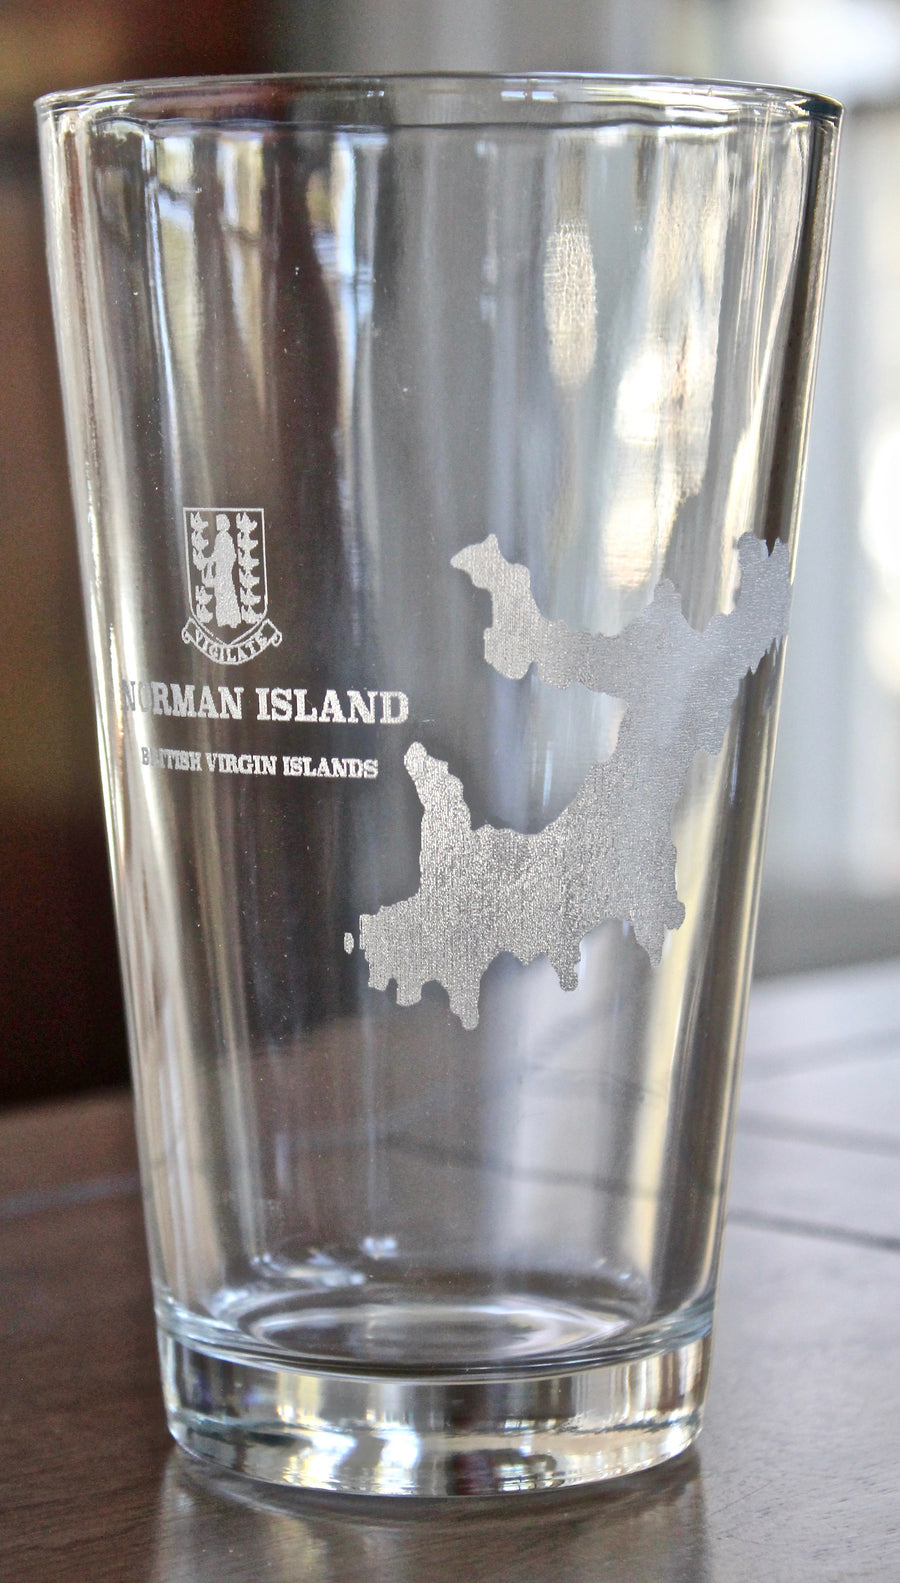 Norman Island BVI Map Engraved Glasses